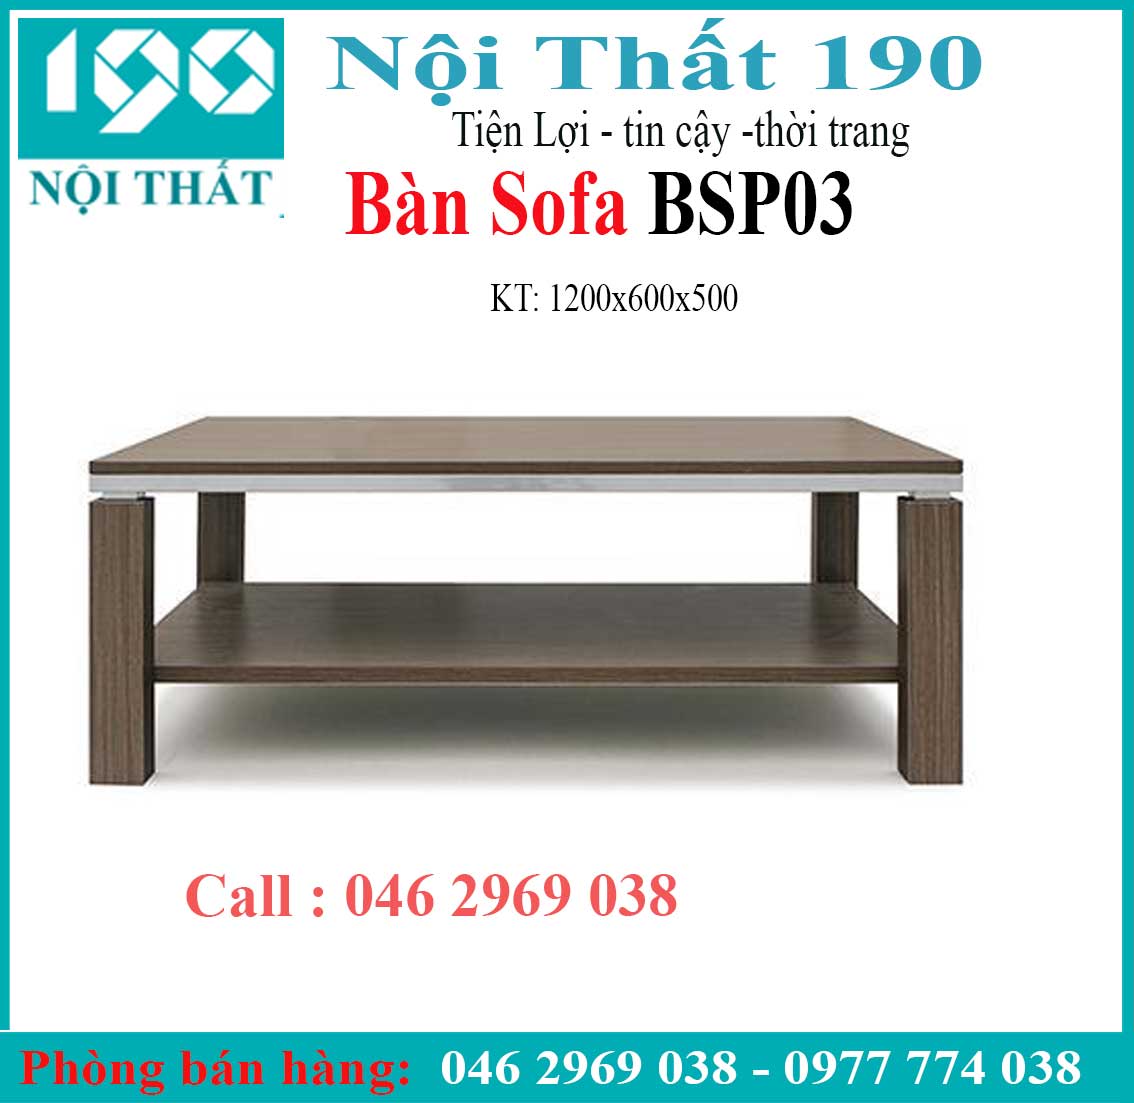 Bàn sofa BSP03